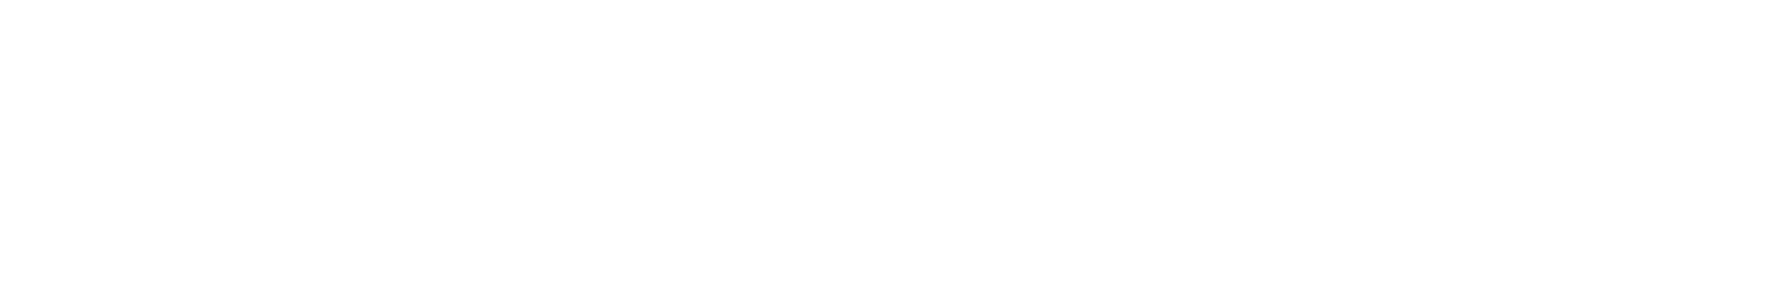 Streamlabs-logo